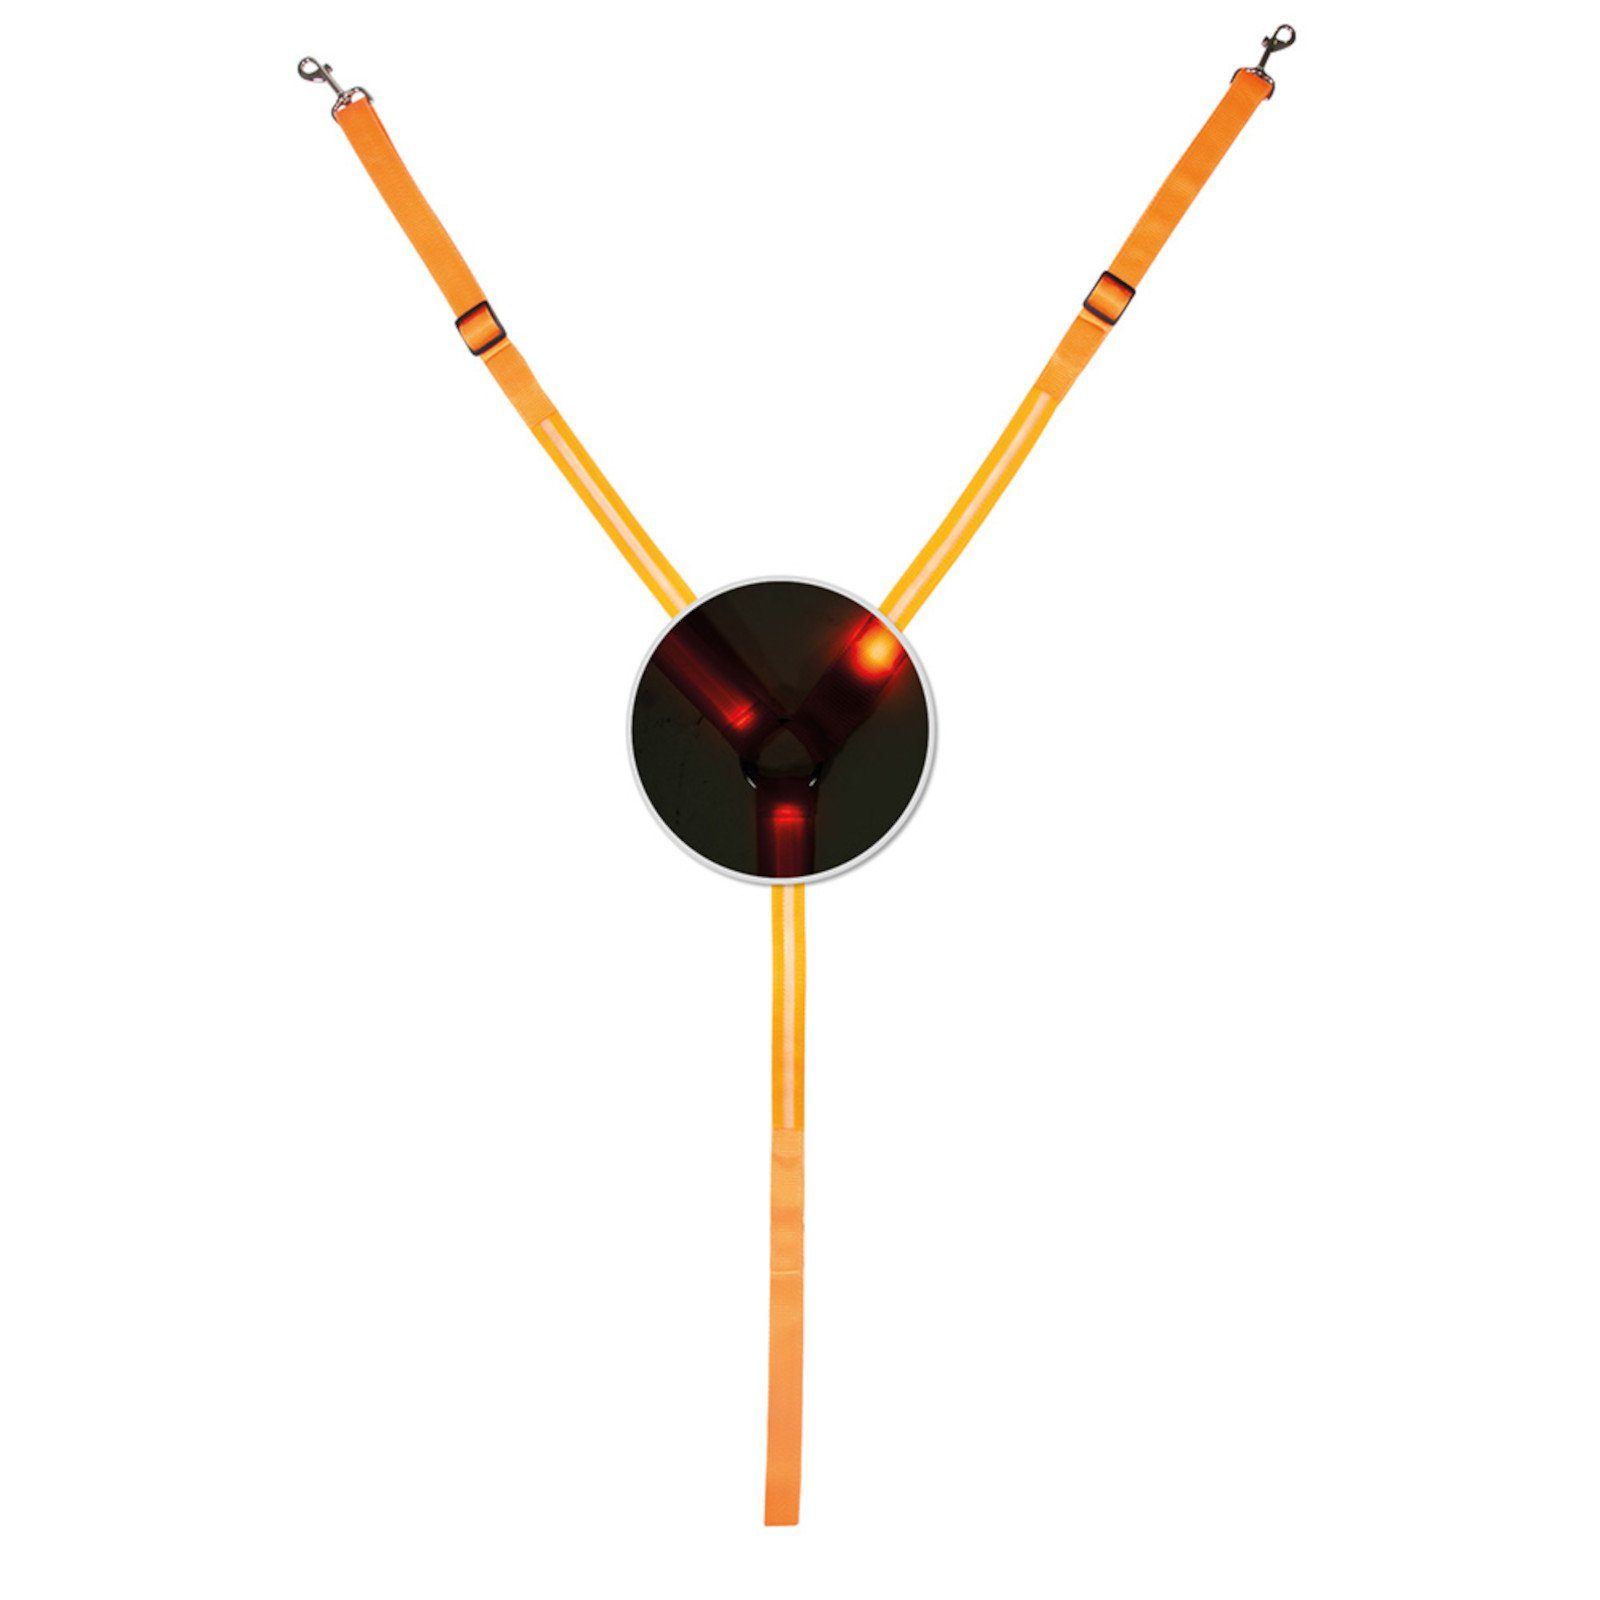 PFIFF Vorderzeug - Warmblut) Warmblut, - Reflektions-Vorderzeug Pfiff - orange (orange LED